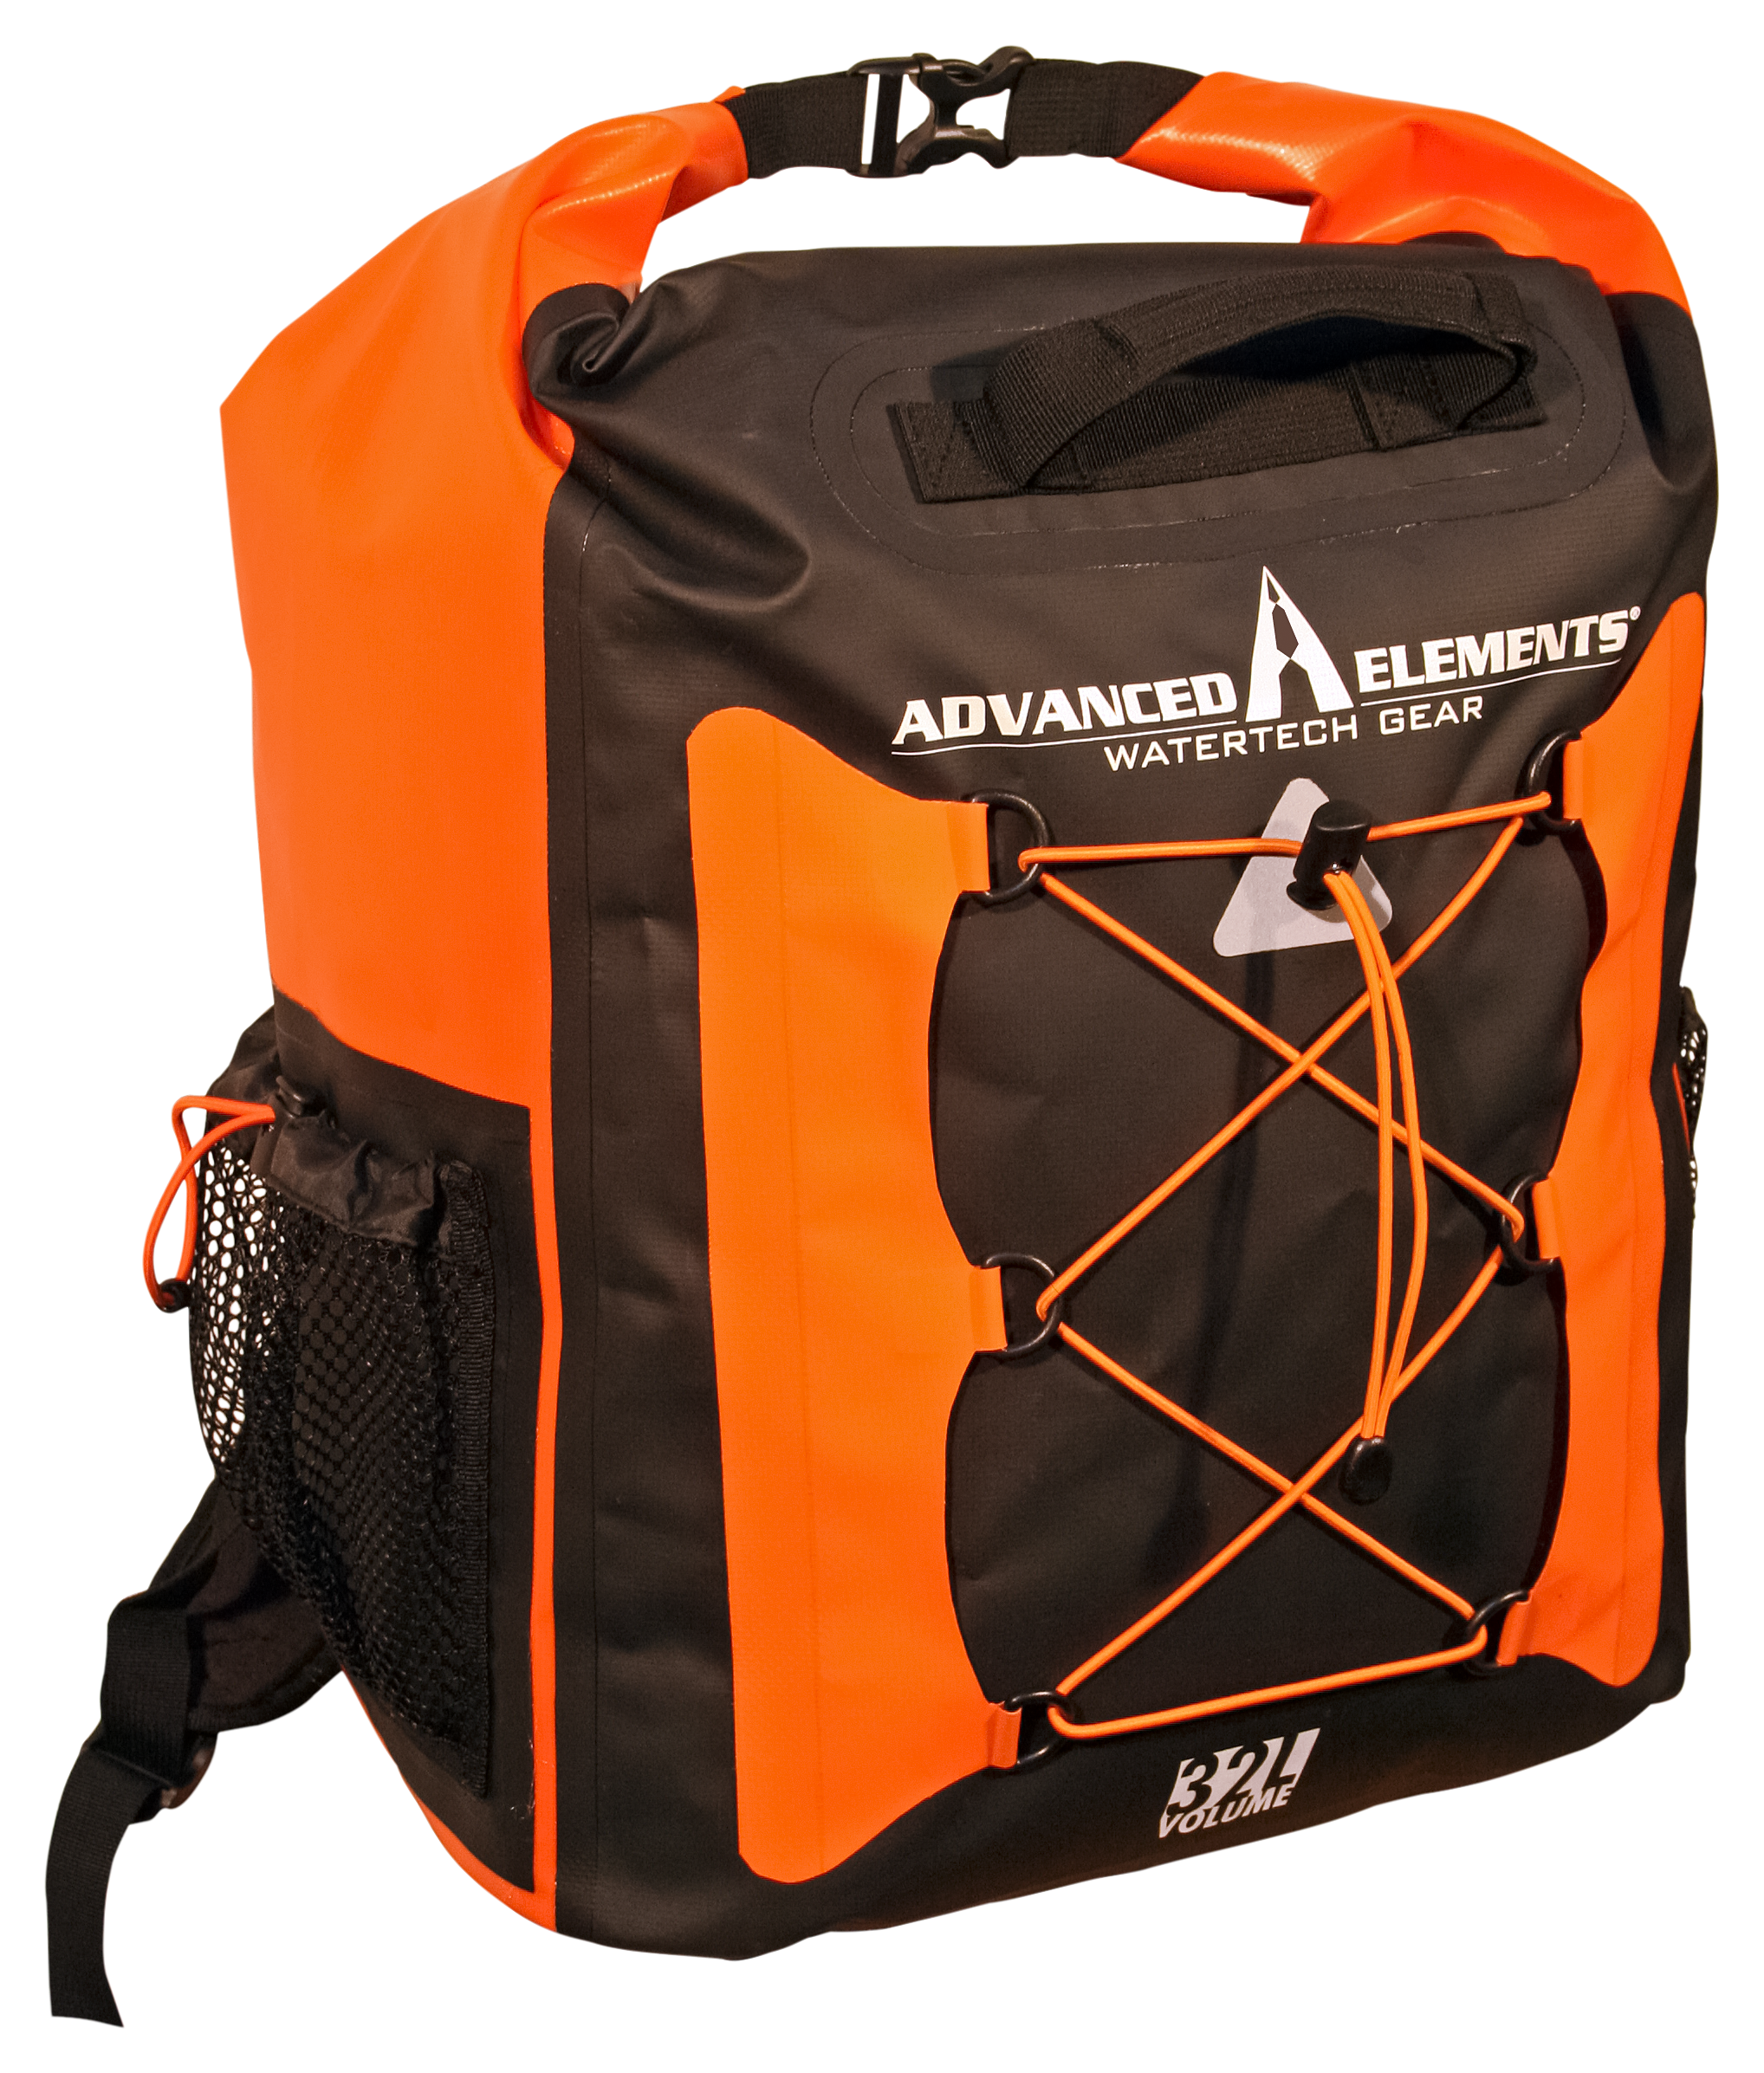 Advanced Elements CargoPak Cargo Bag